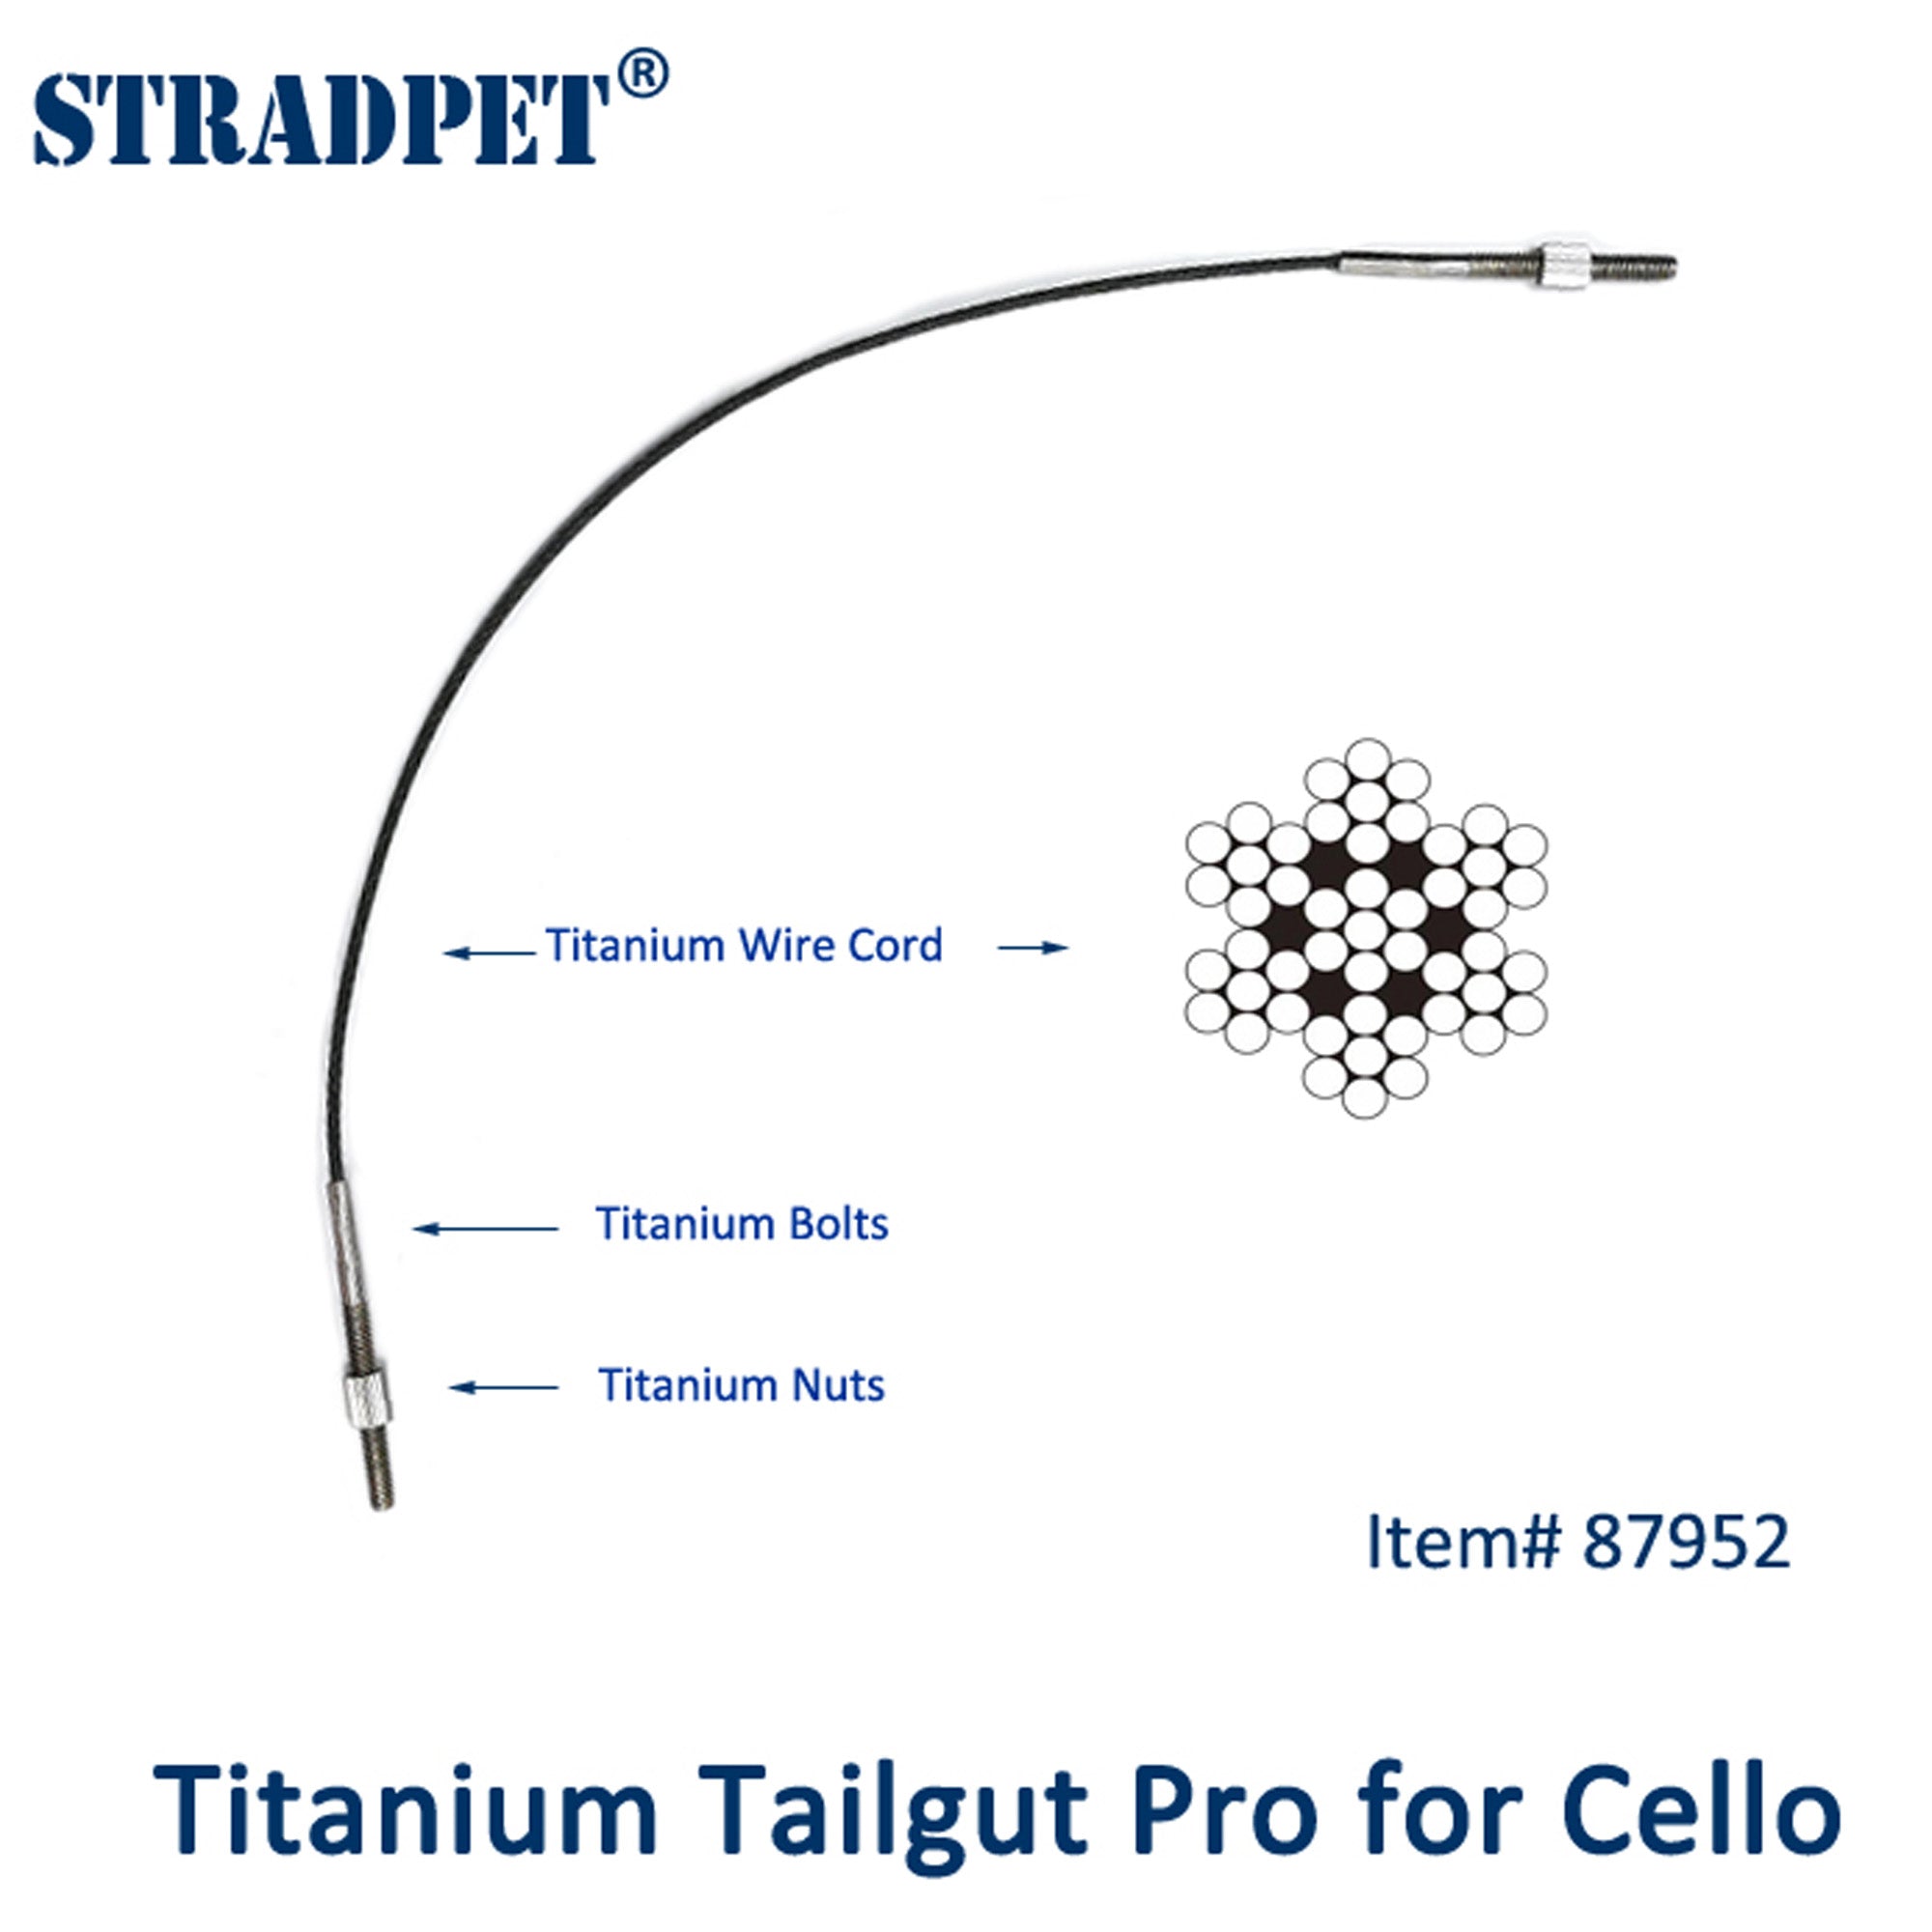 Titanium Tailgut Pro for Cello